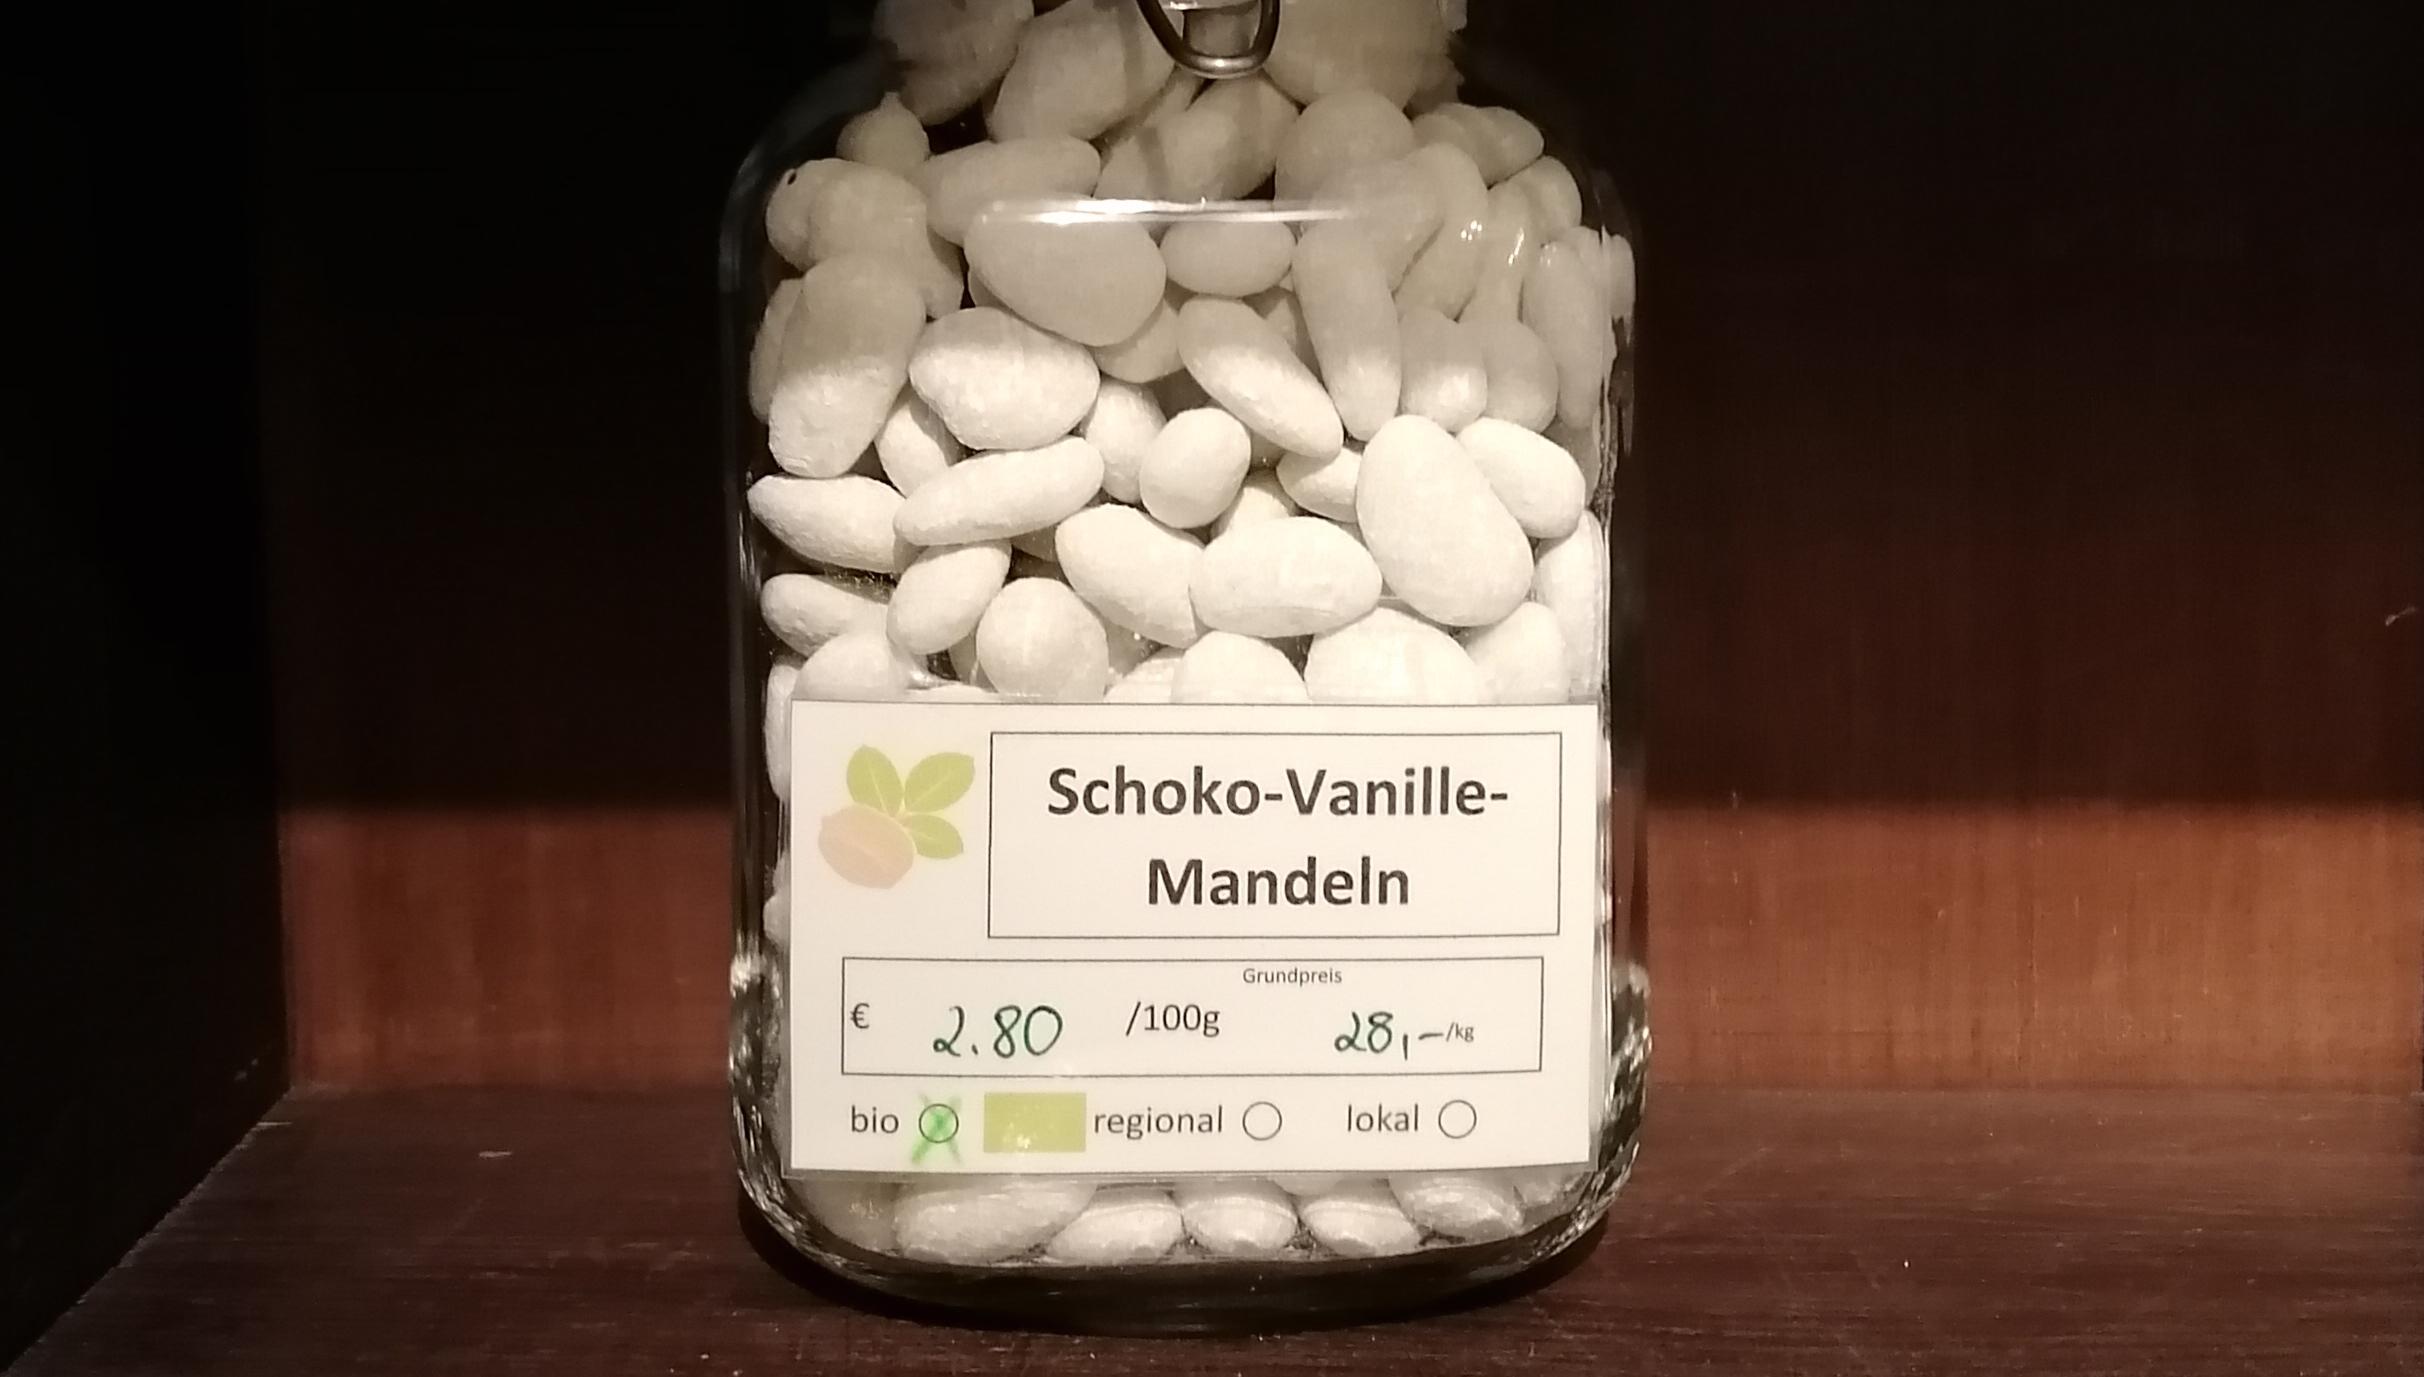 Schoko-Vanille-Mandeln